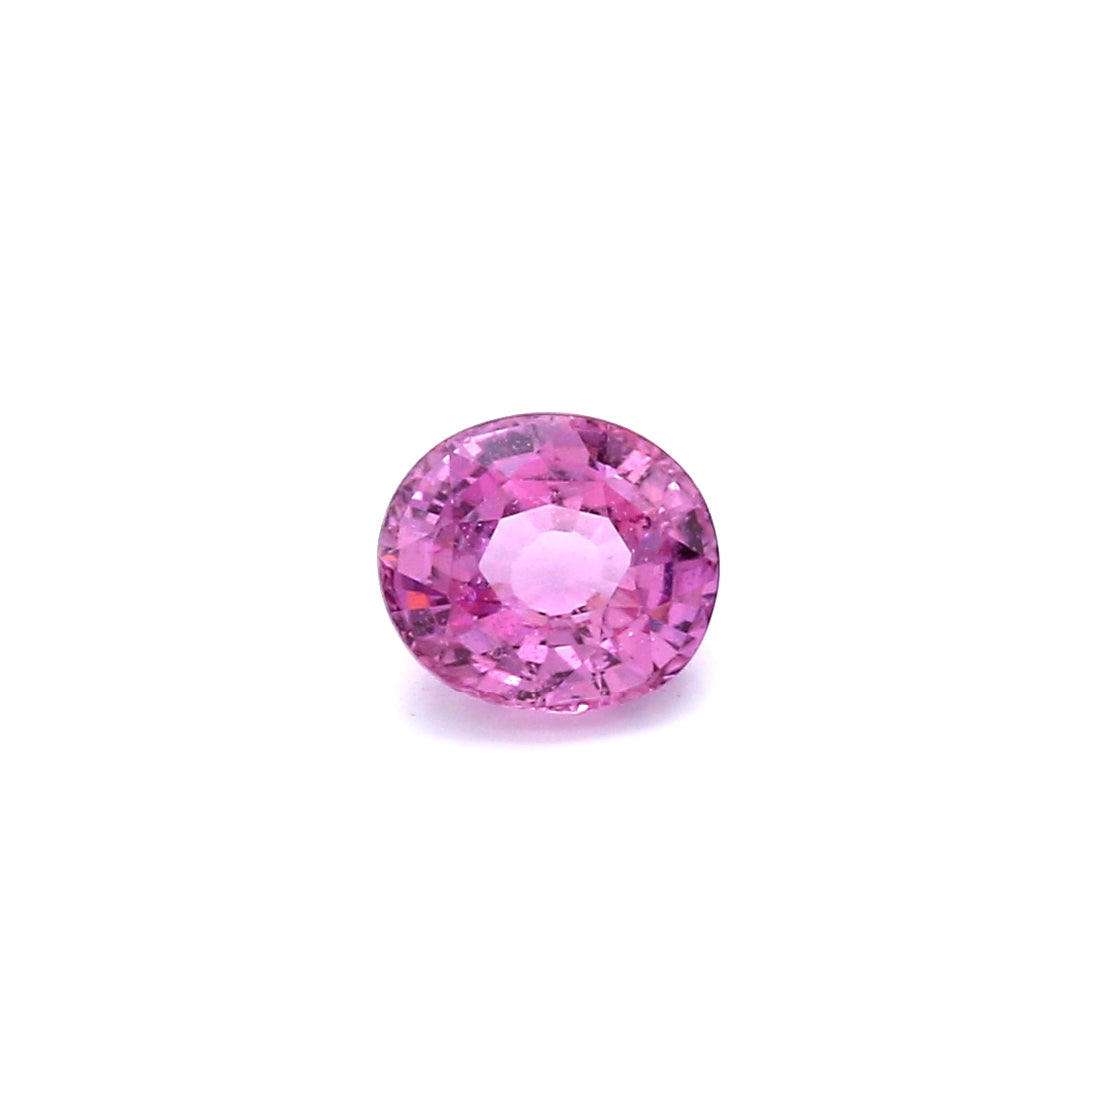 0.94ct Purplish Pink, Oval Sapphire, Heated, Madagascar - 5.99 x 5.25 x 3.37mm